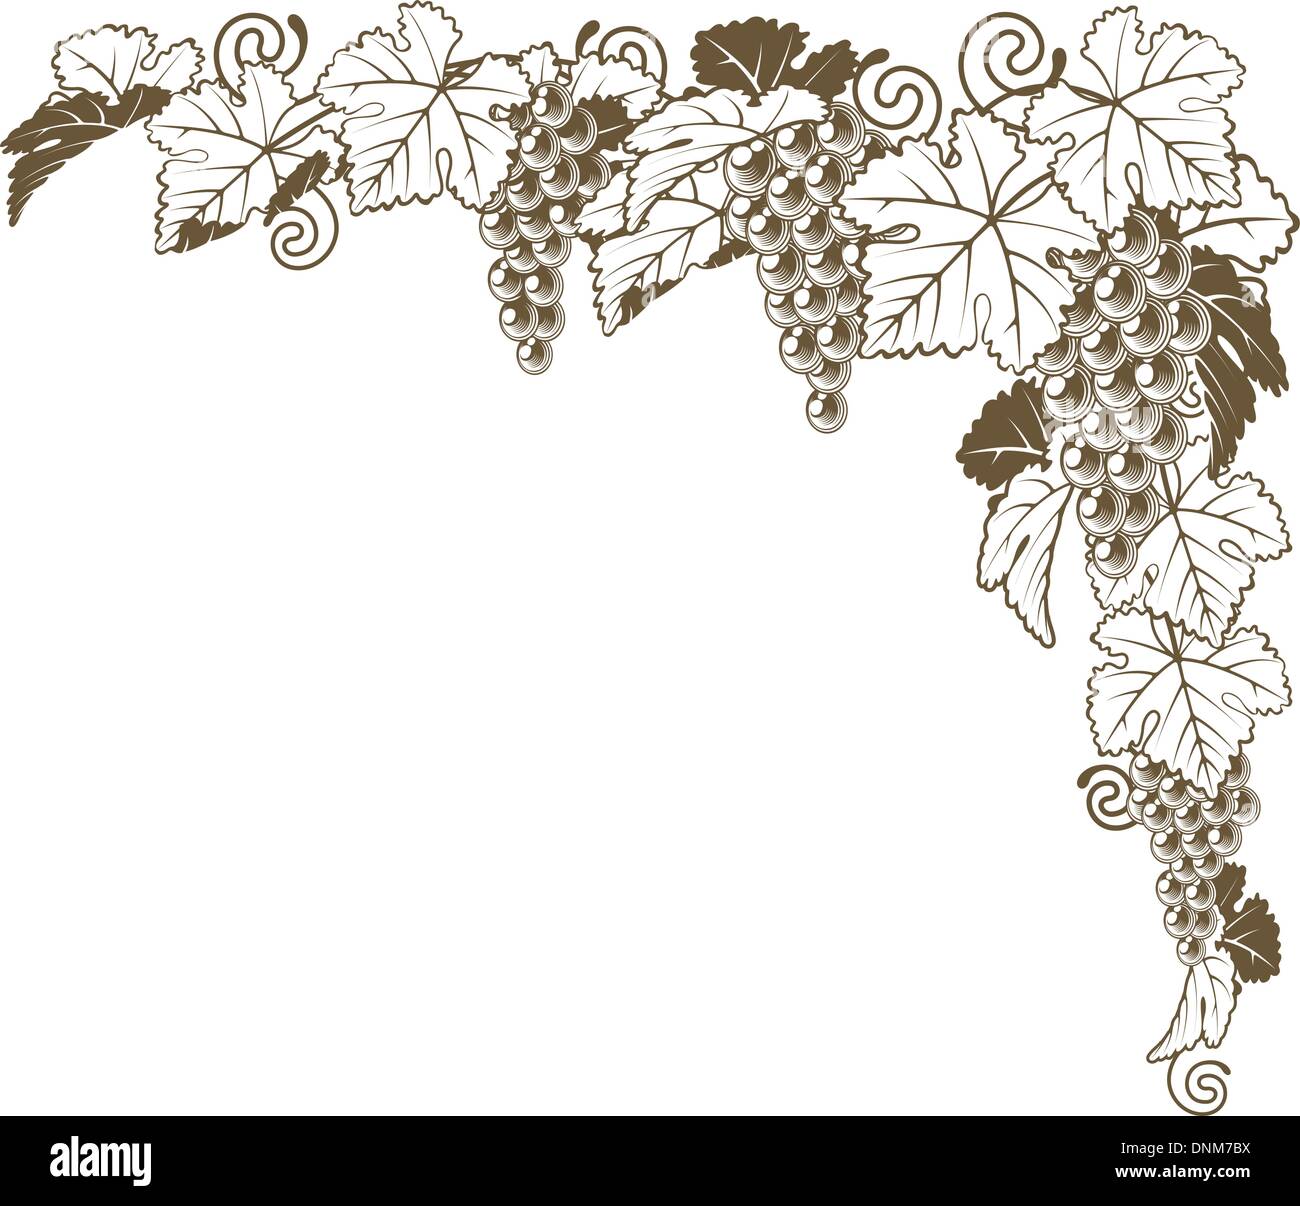 A grape vine border corner ornament design element of grape bunches and leaves in vintage style, wine label concept. Stock Vector